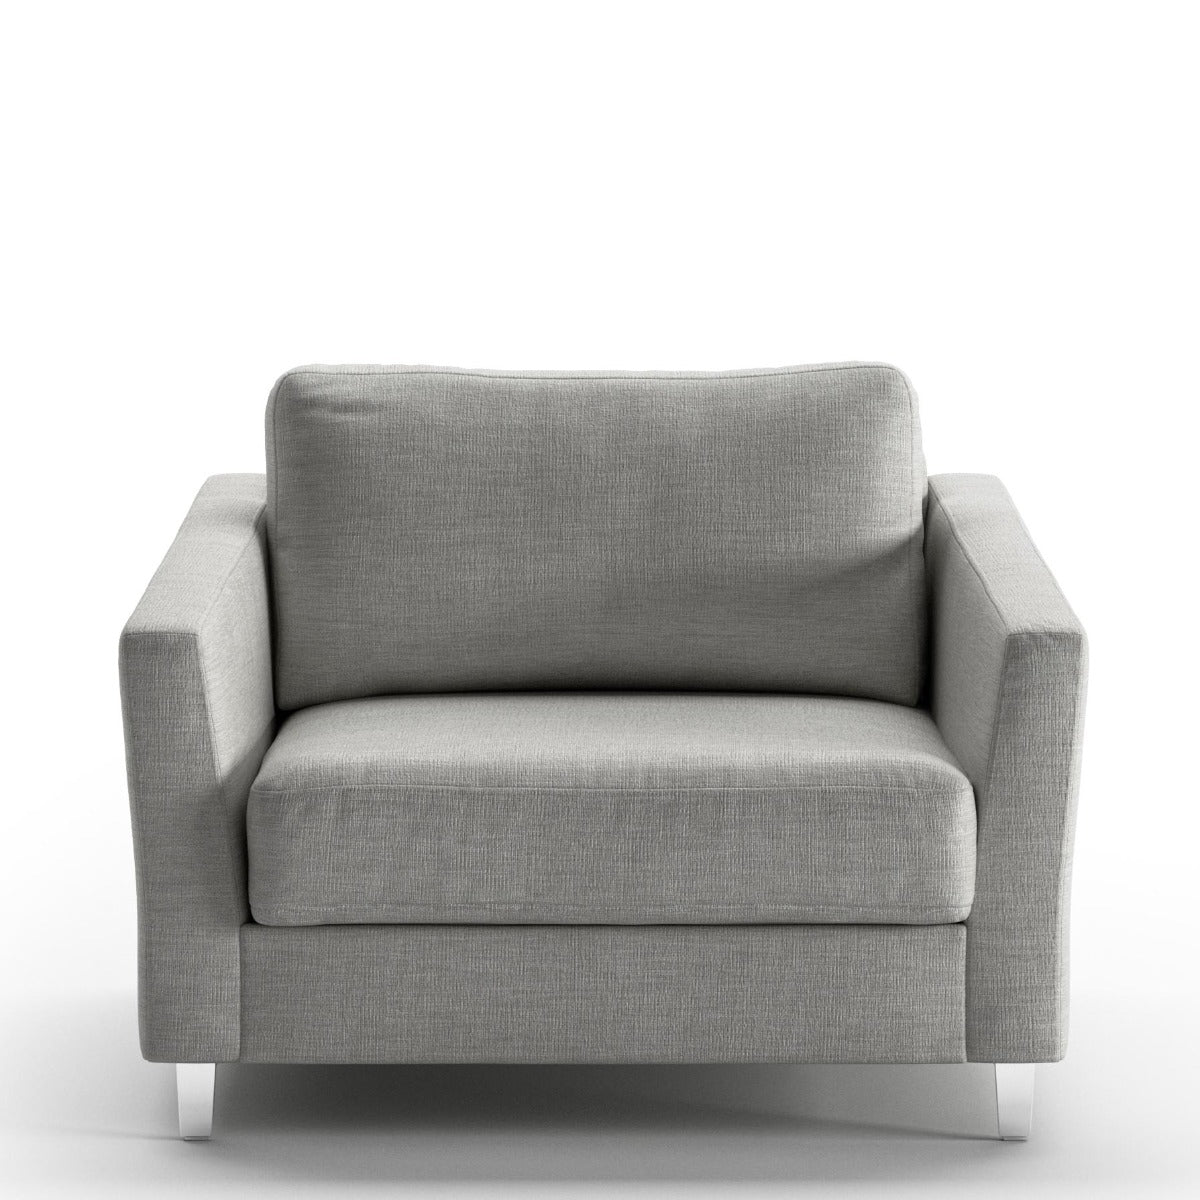 Luonto Furniture Monika Cot Chair Sleeper - Oliver 173 -234/9 Chrome